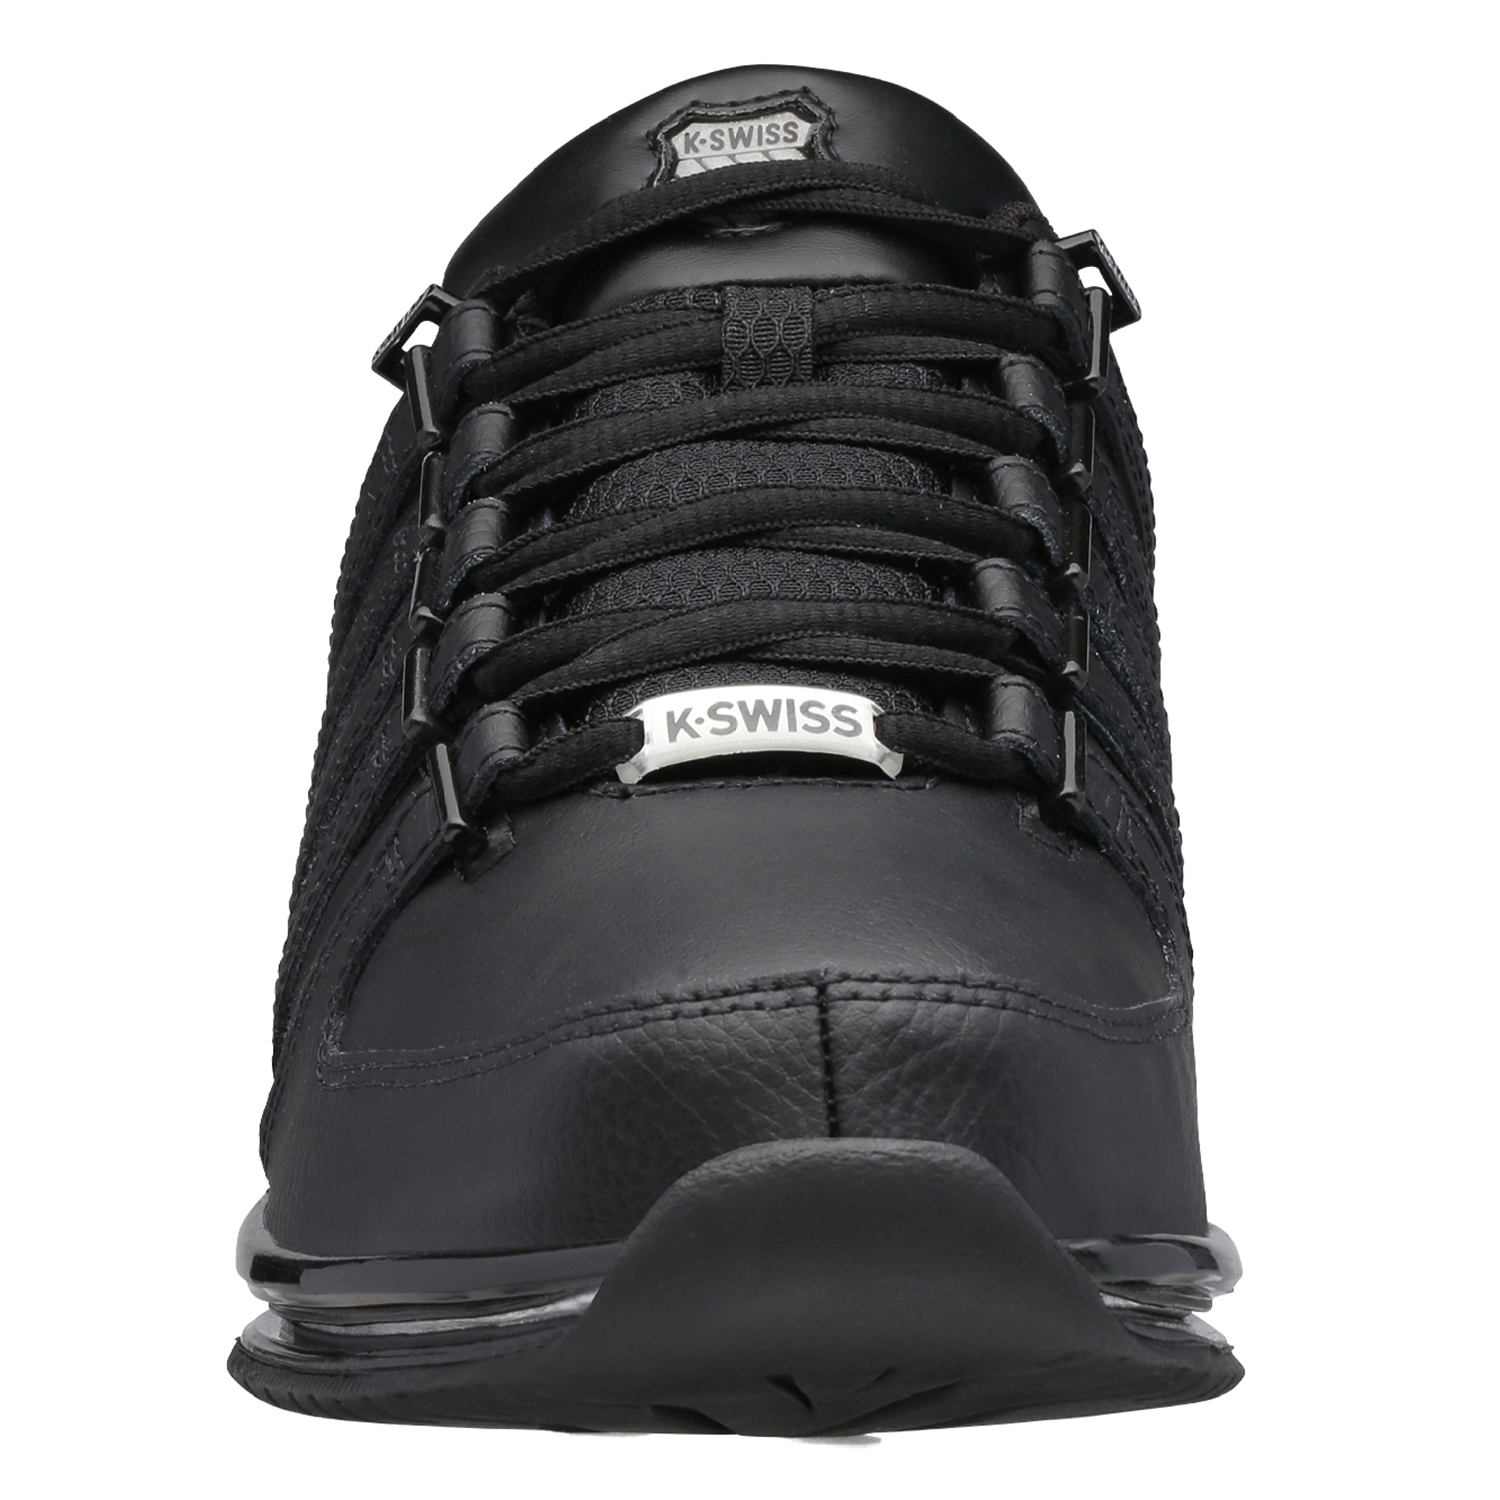 K-Swiss Rinzler Herren Sneaker Sportschuh 01235-019-M schwarz/silber